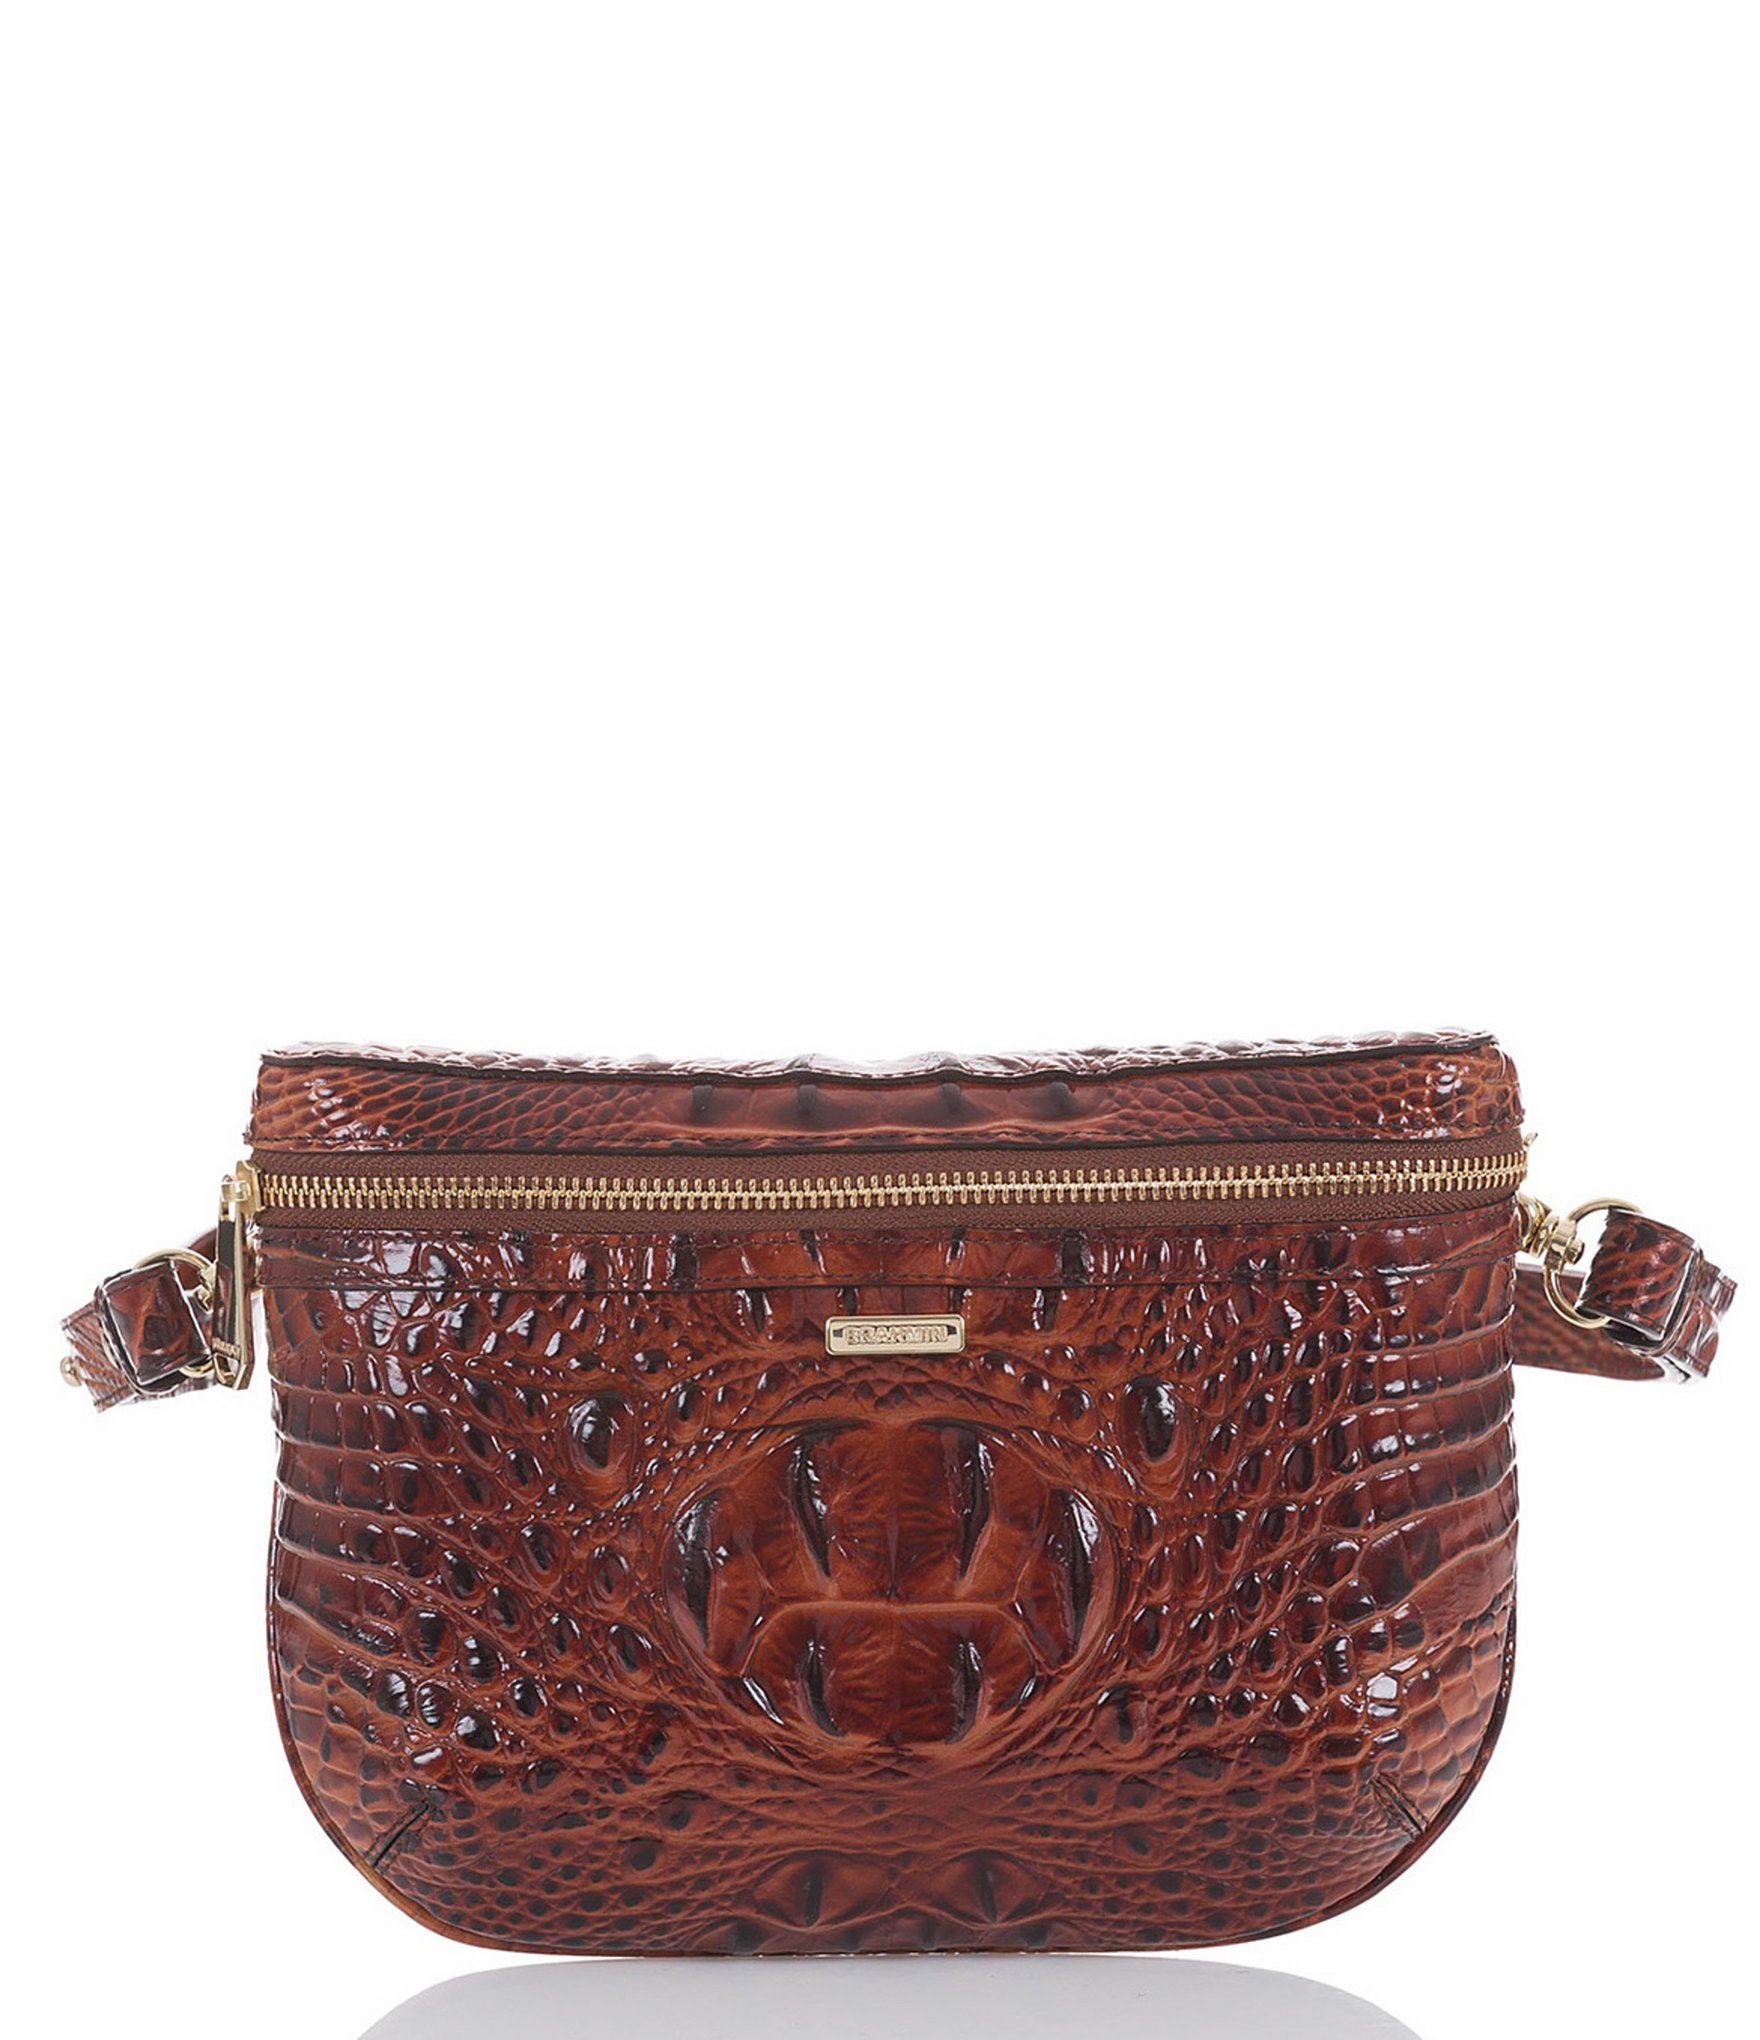 leather purse: Handbags, Purses & Wallets | Dillards.com